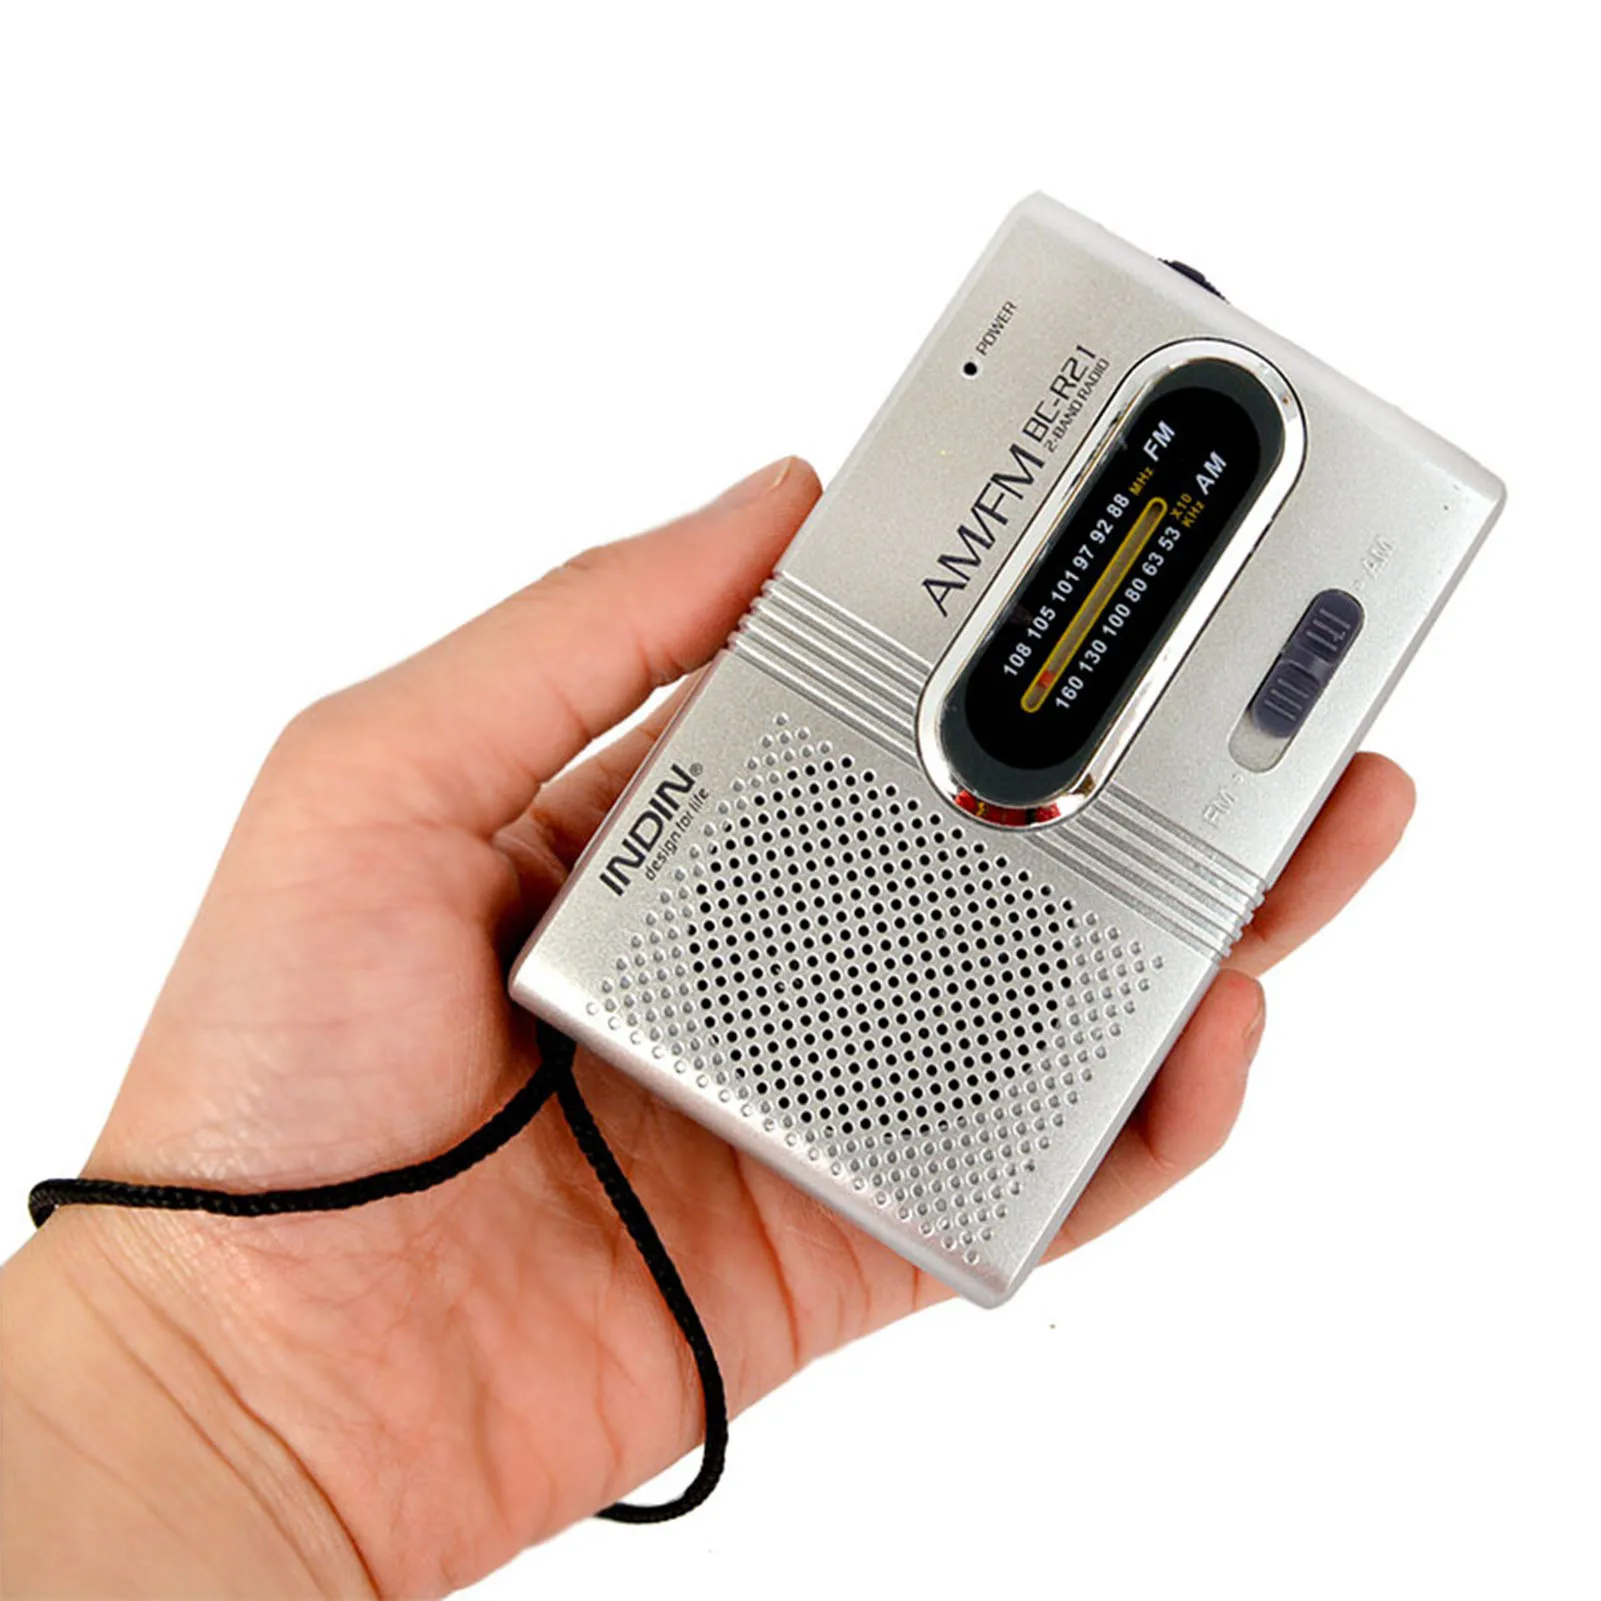 

AM/FM Battery Operated Portable Pocket Radio Compact Transistor Radios Battery Operated Radio With Loud Speaker Earphone Jack